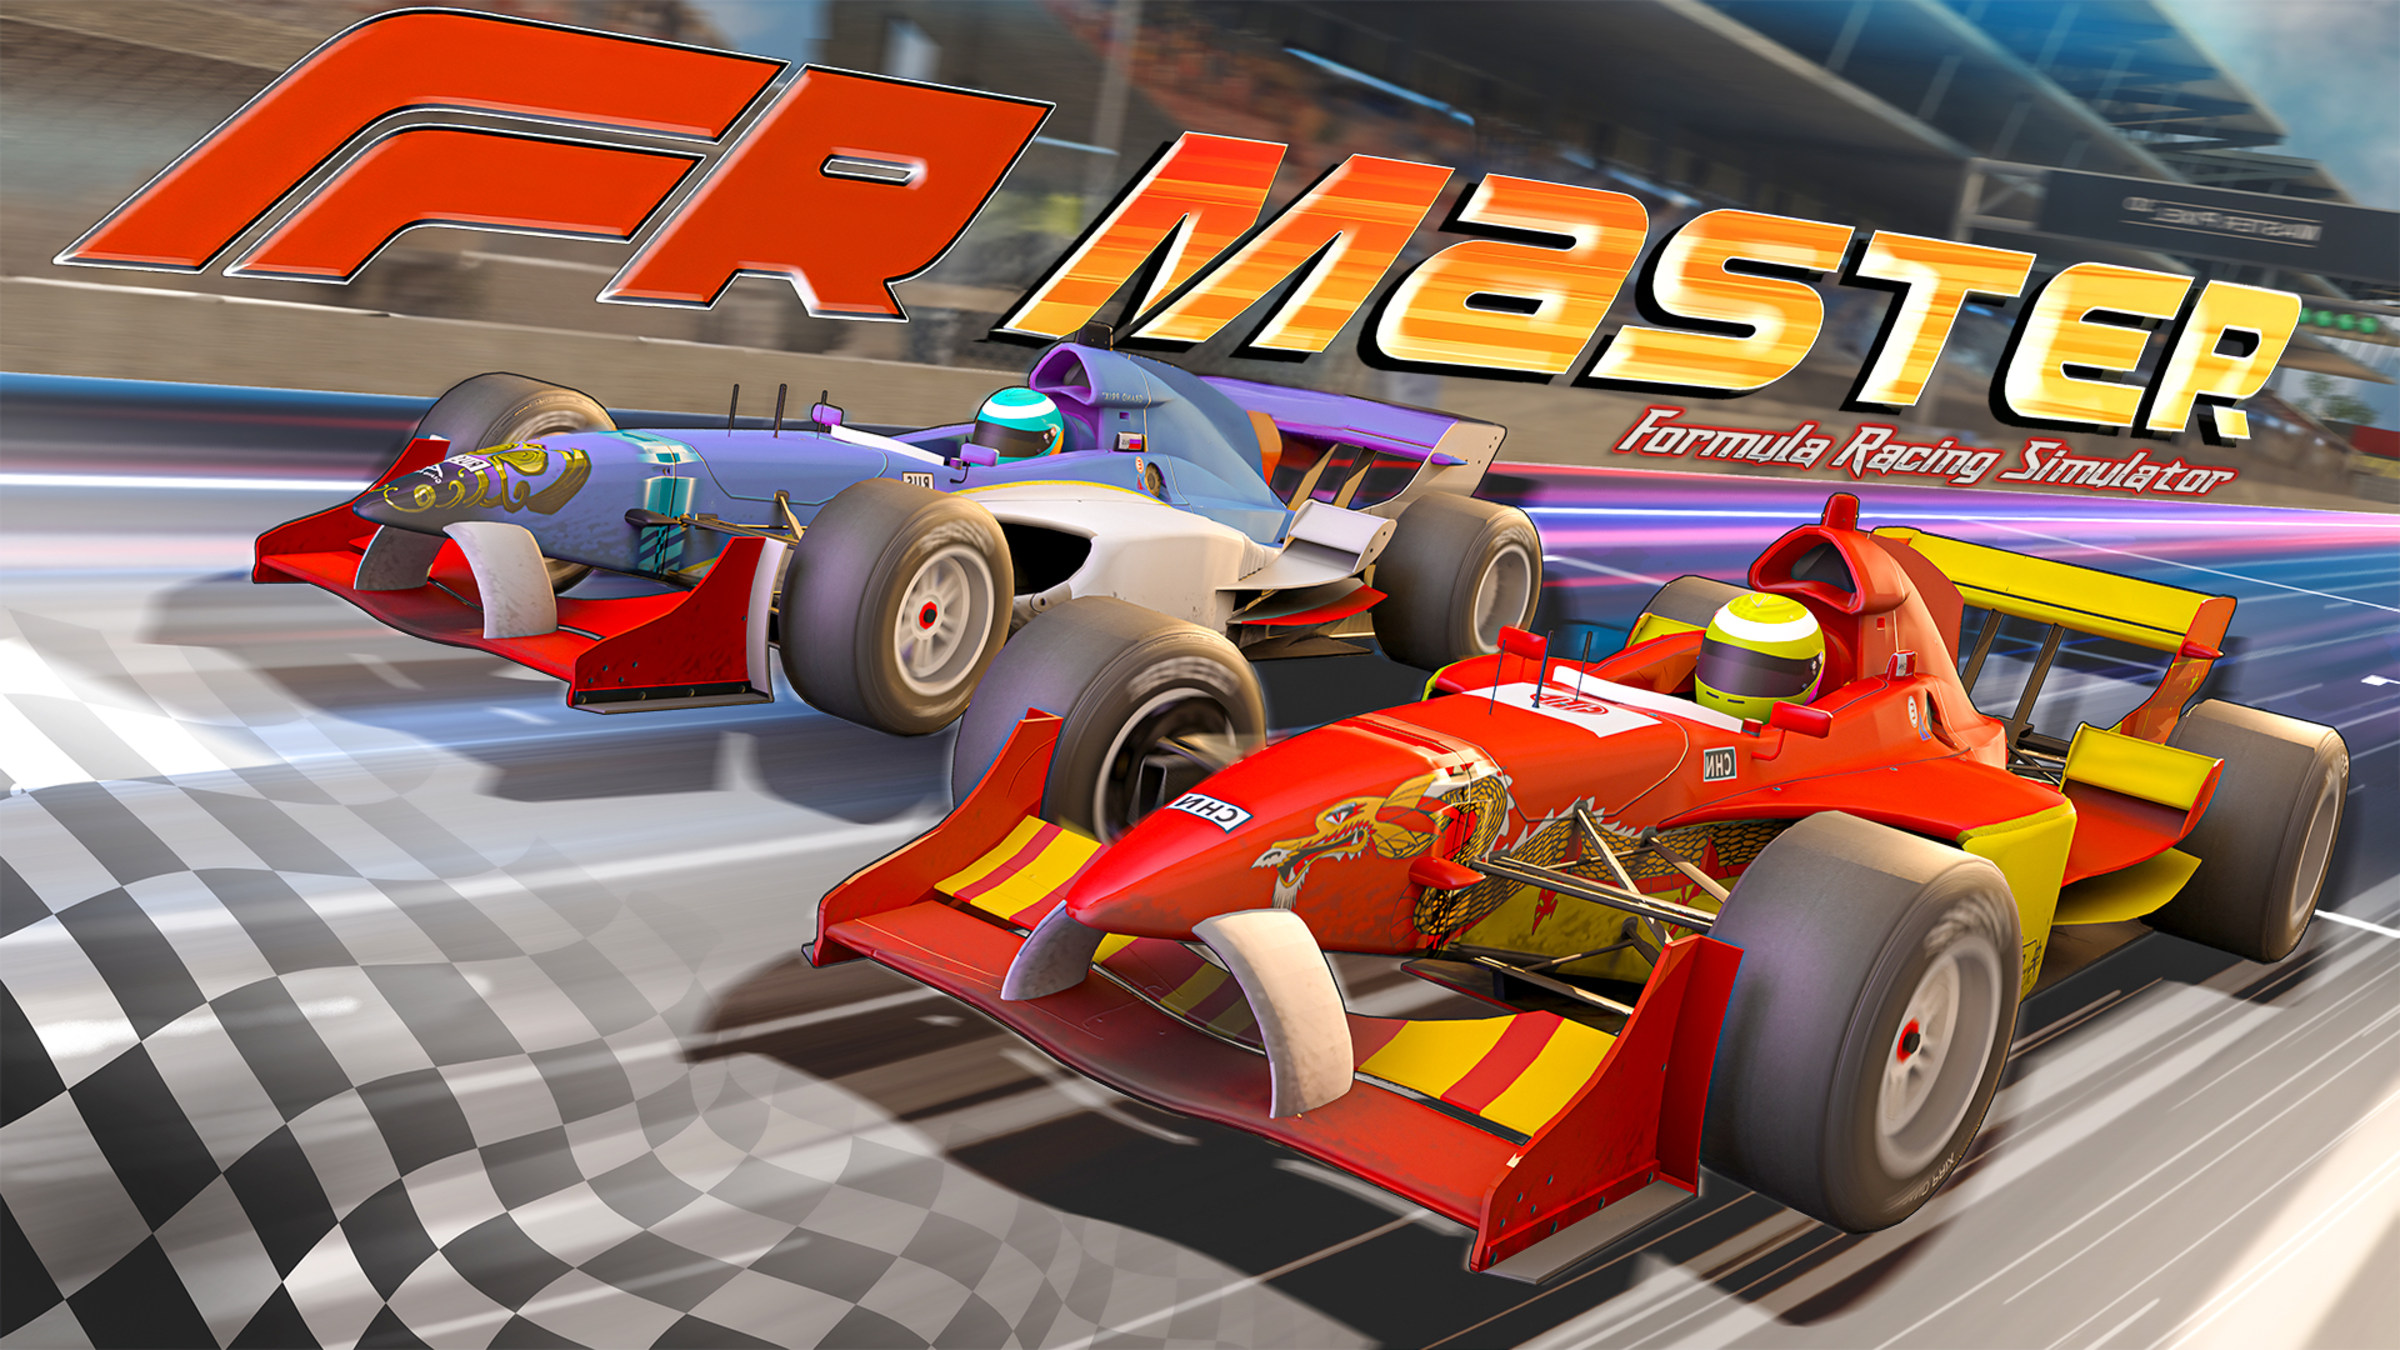 FRMaster - Formula Racing Simulator for Nintendo Switch